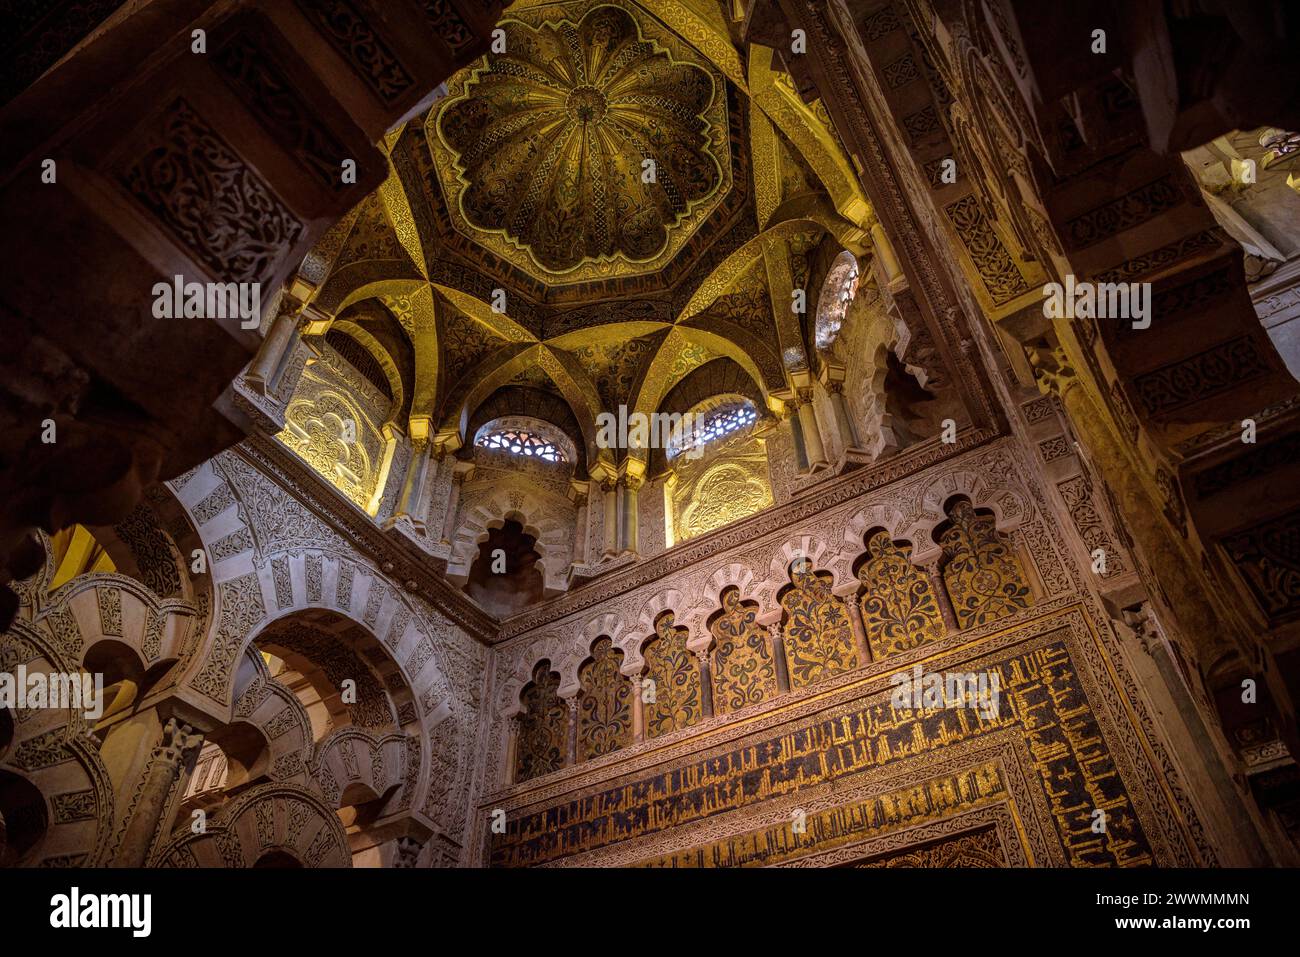 Interior of the richly ornamented and decorated Mosque Cathedral of Córdoba (Córdoba, Andalusia, Spain) ESP: Interior de la Mezquita-Catedral, Córdoba Stock Photo